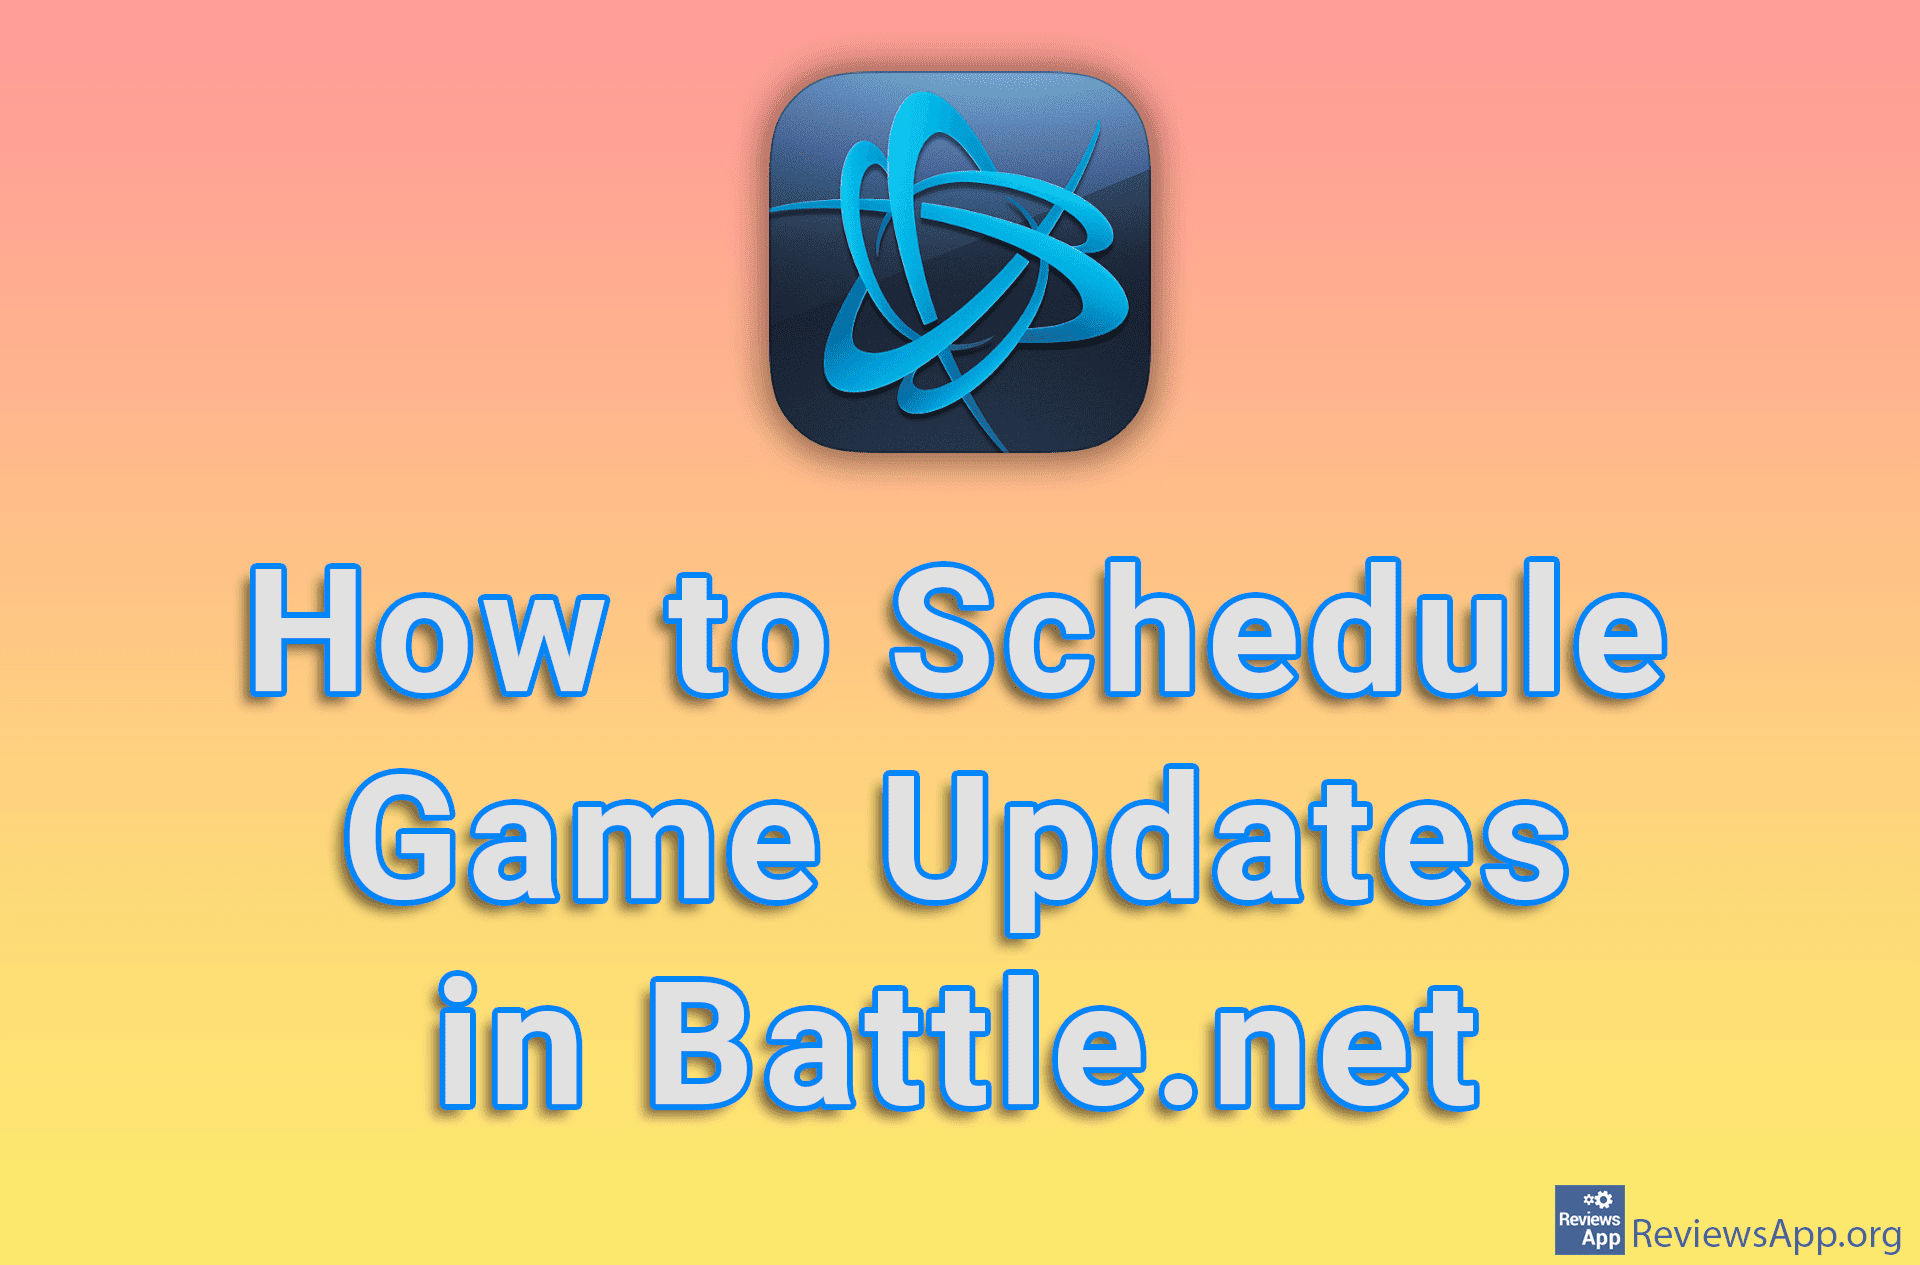 How to Schedule Game Updates in Battle.net